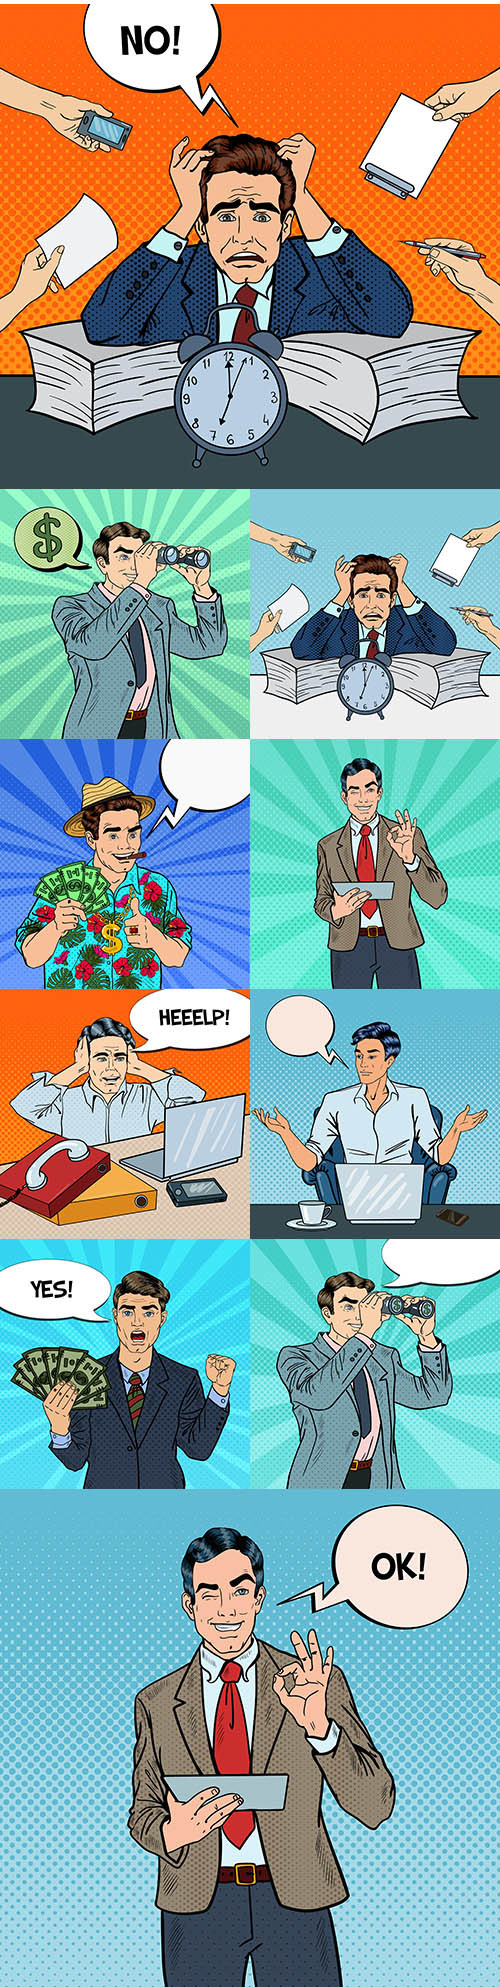 Pop art businessman in multitasking office work illustration
